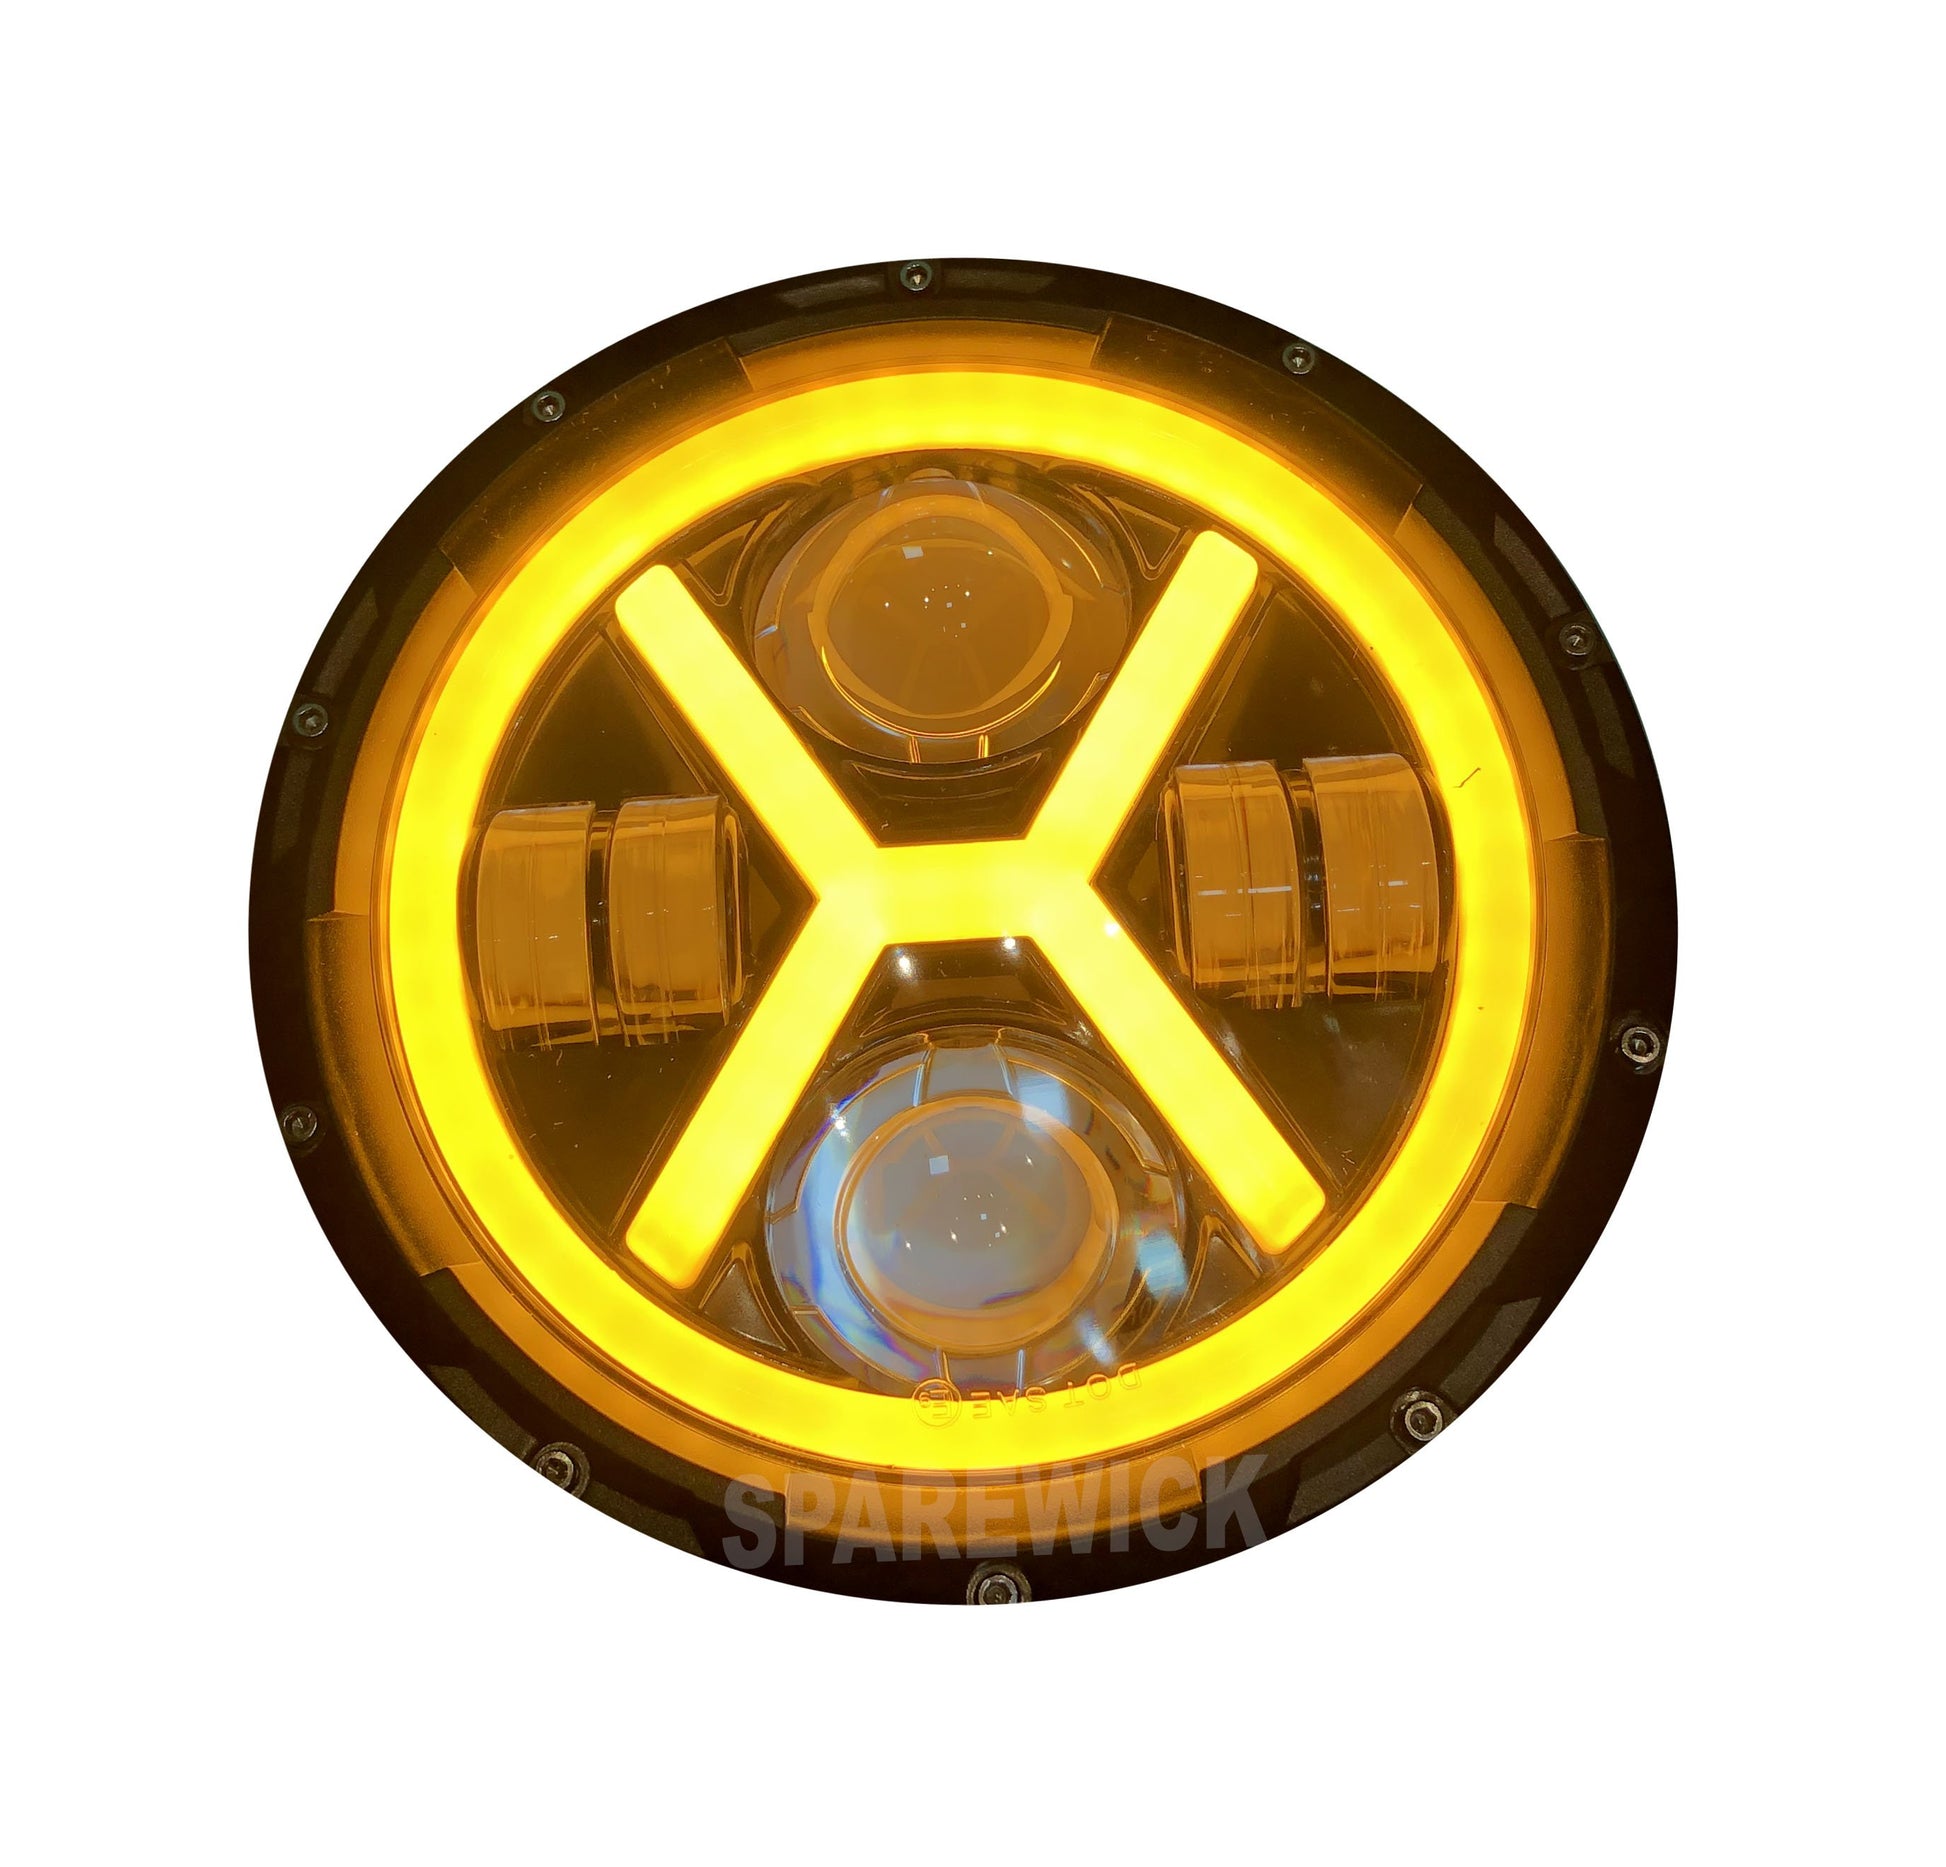 X Headlight with Tiranga-7 Inch (6 Months Guarantee) - Premium Headlights from Sparewick - Just Rs. 2900! Shop now at Sparewick